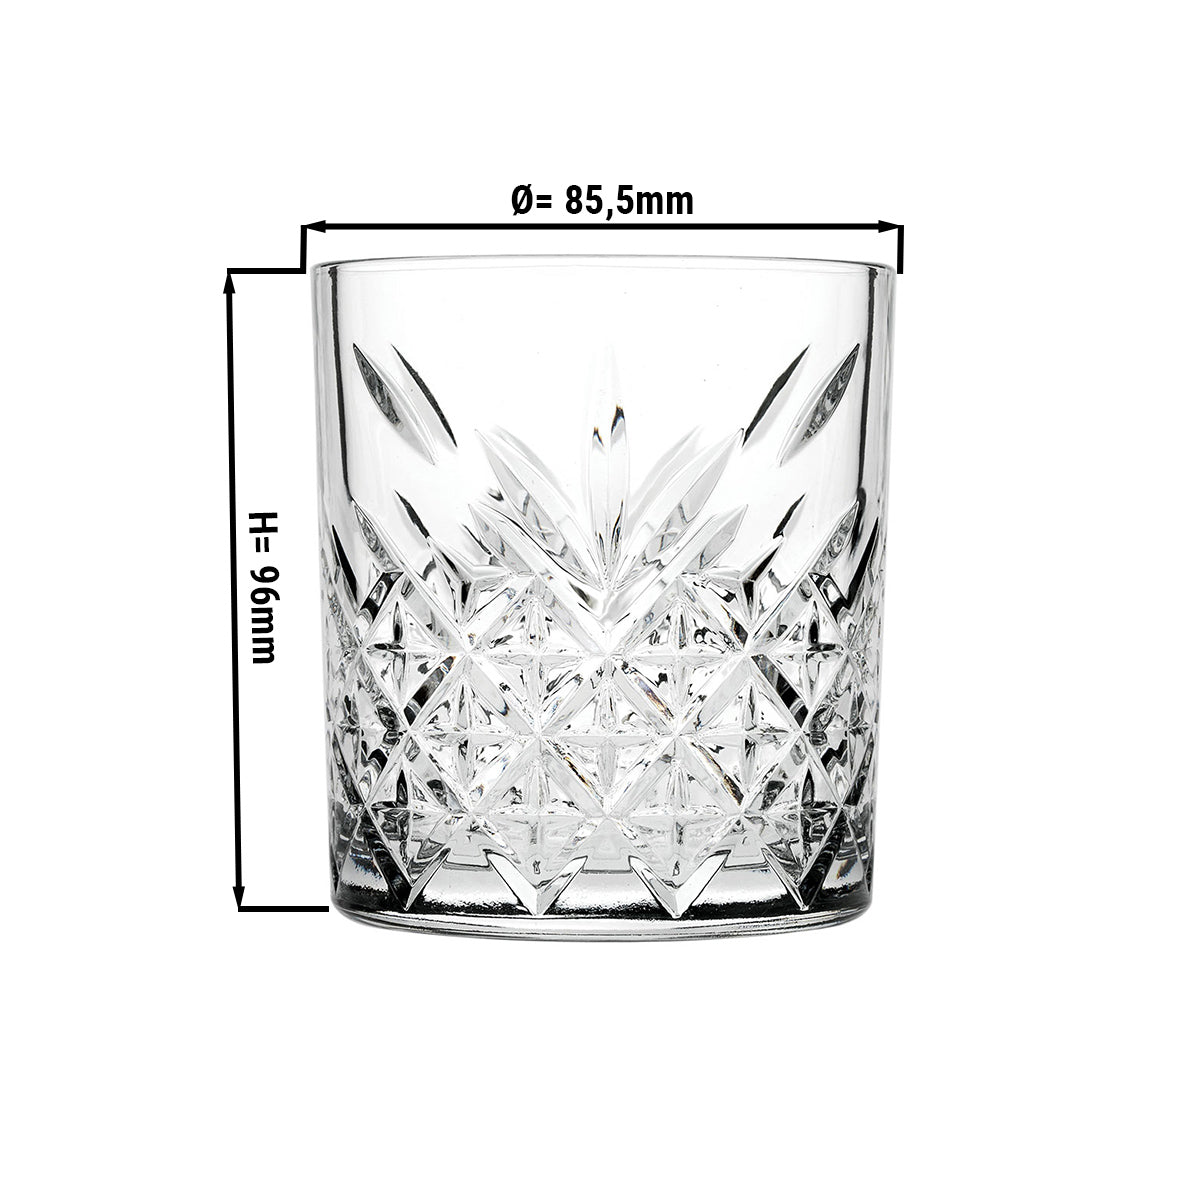 (12 stk.) MOSCOW whiskyglas - 0,35 liter